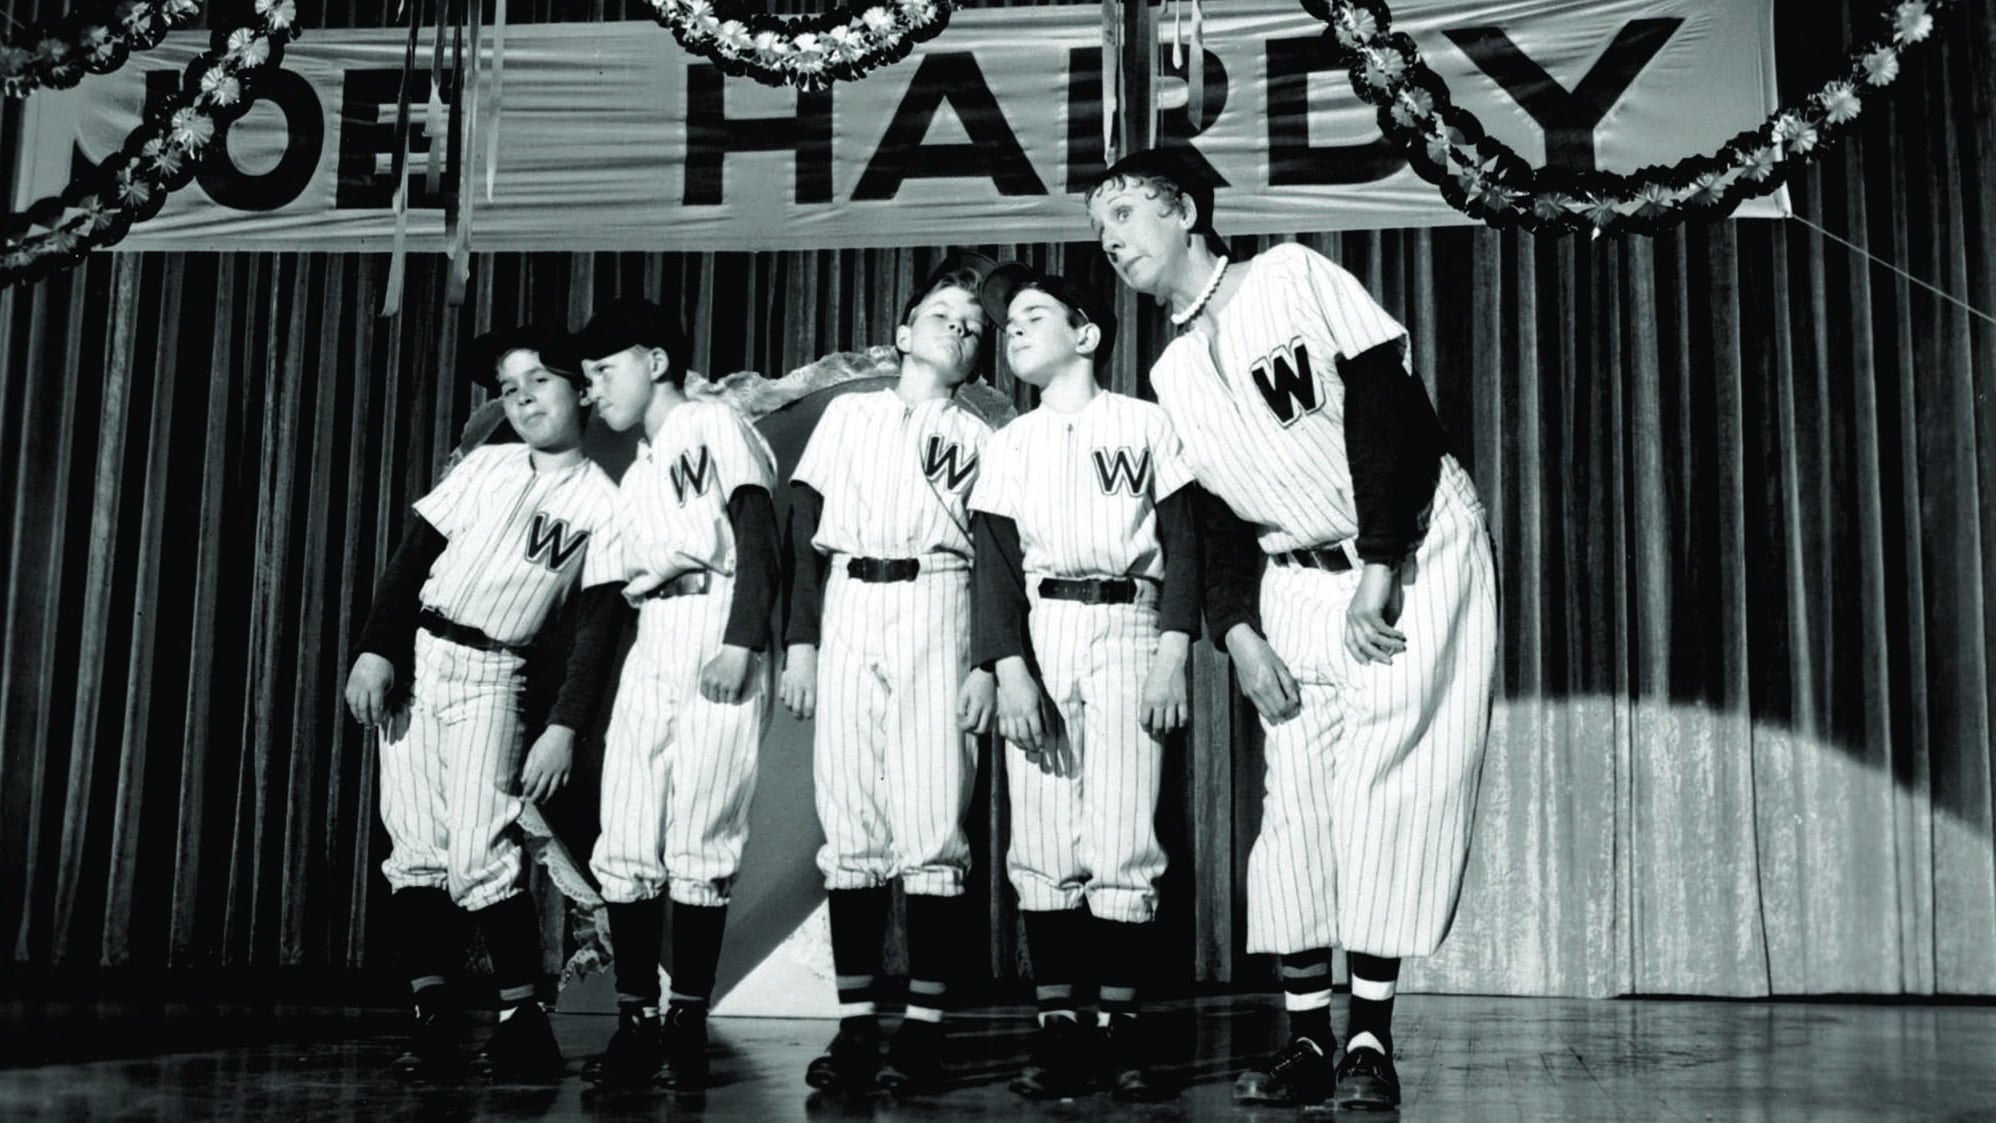 Damn Yankees (1958)